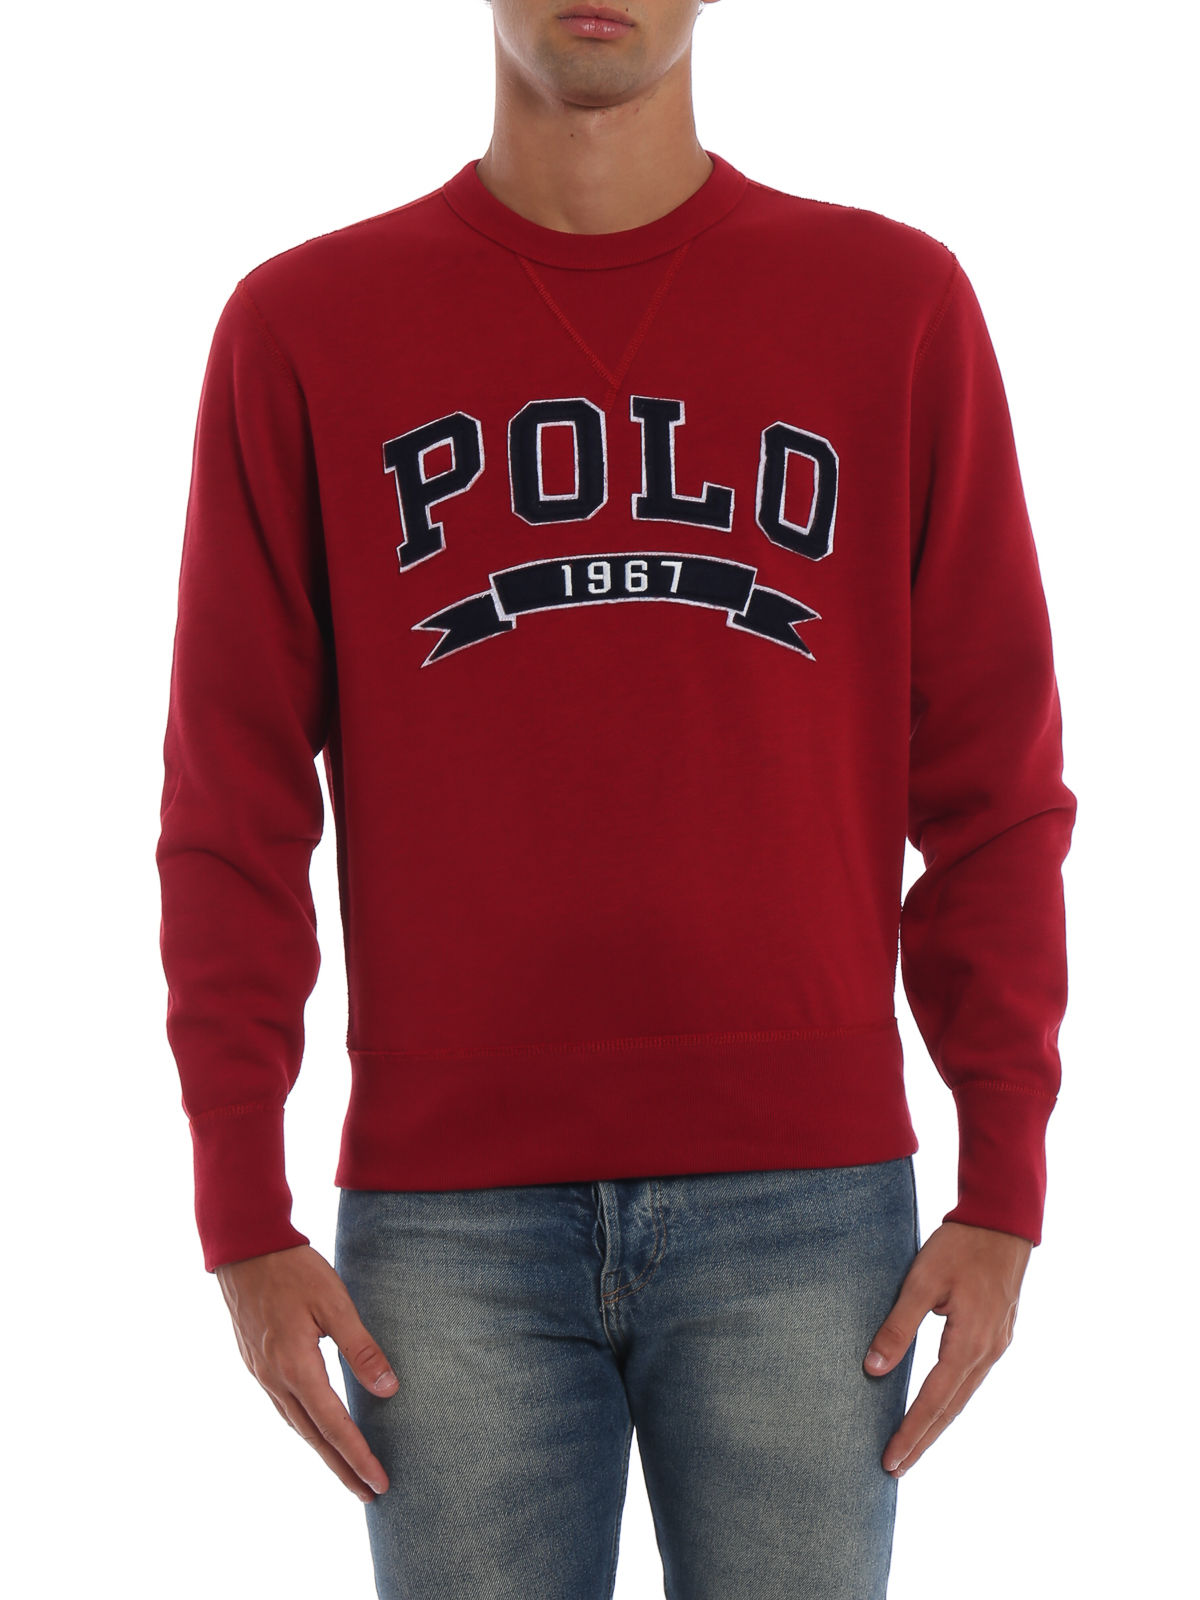 Sweatshirts & Sweaters Polo Ralph Lauren - Polo 1967 red sweatshirt -  710722641003